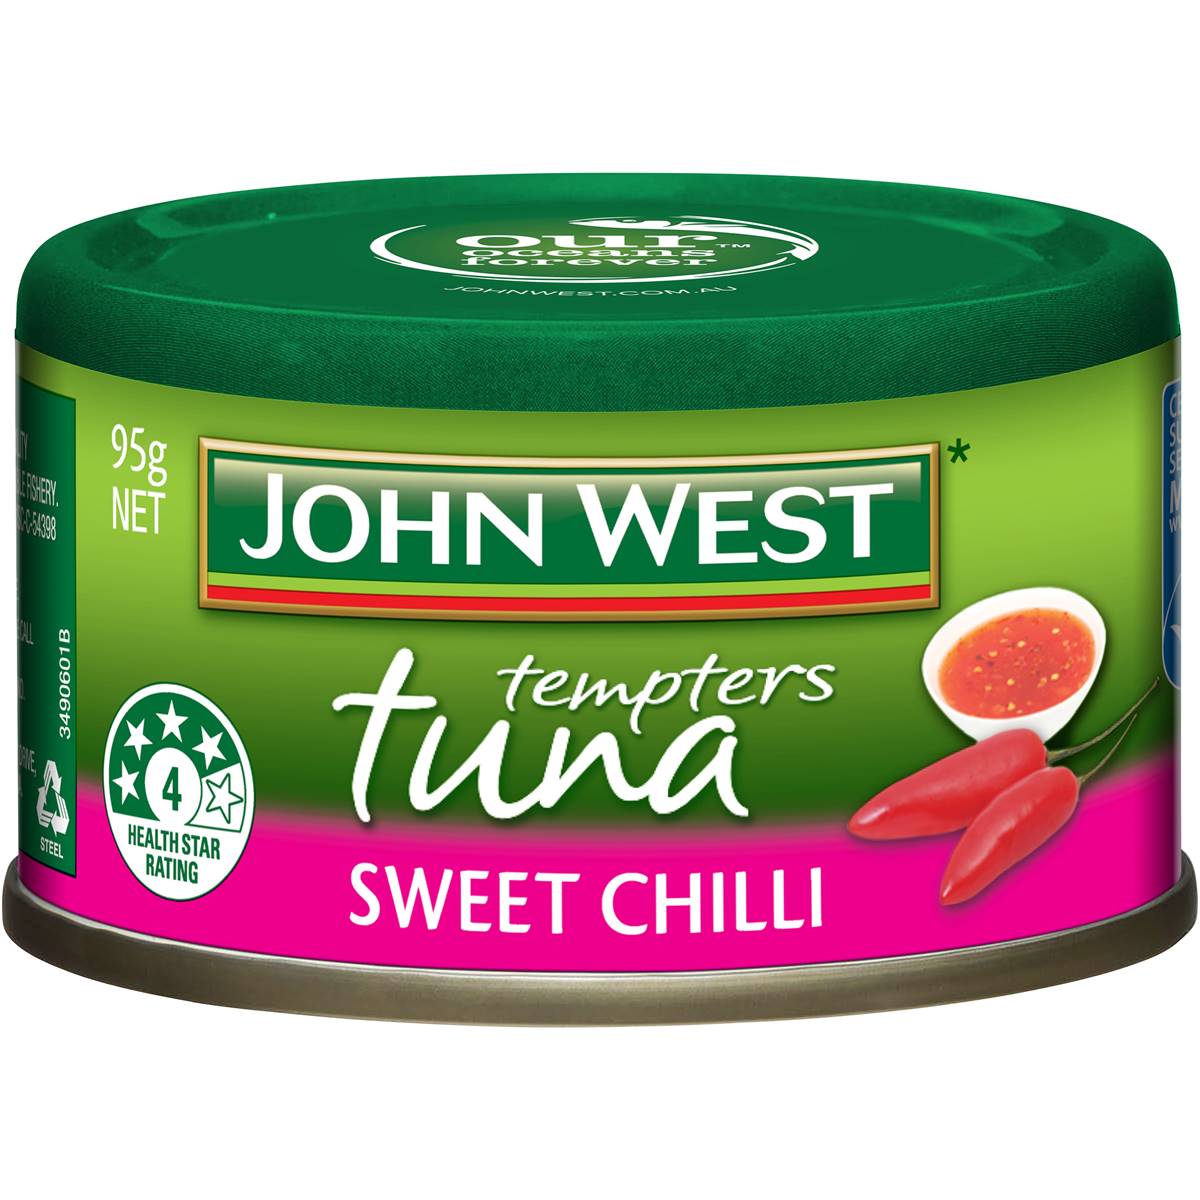 John West Tuna Sweet Chilli 95g